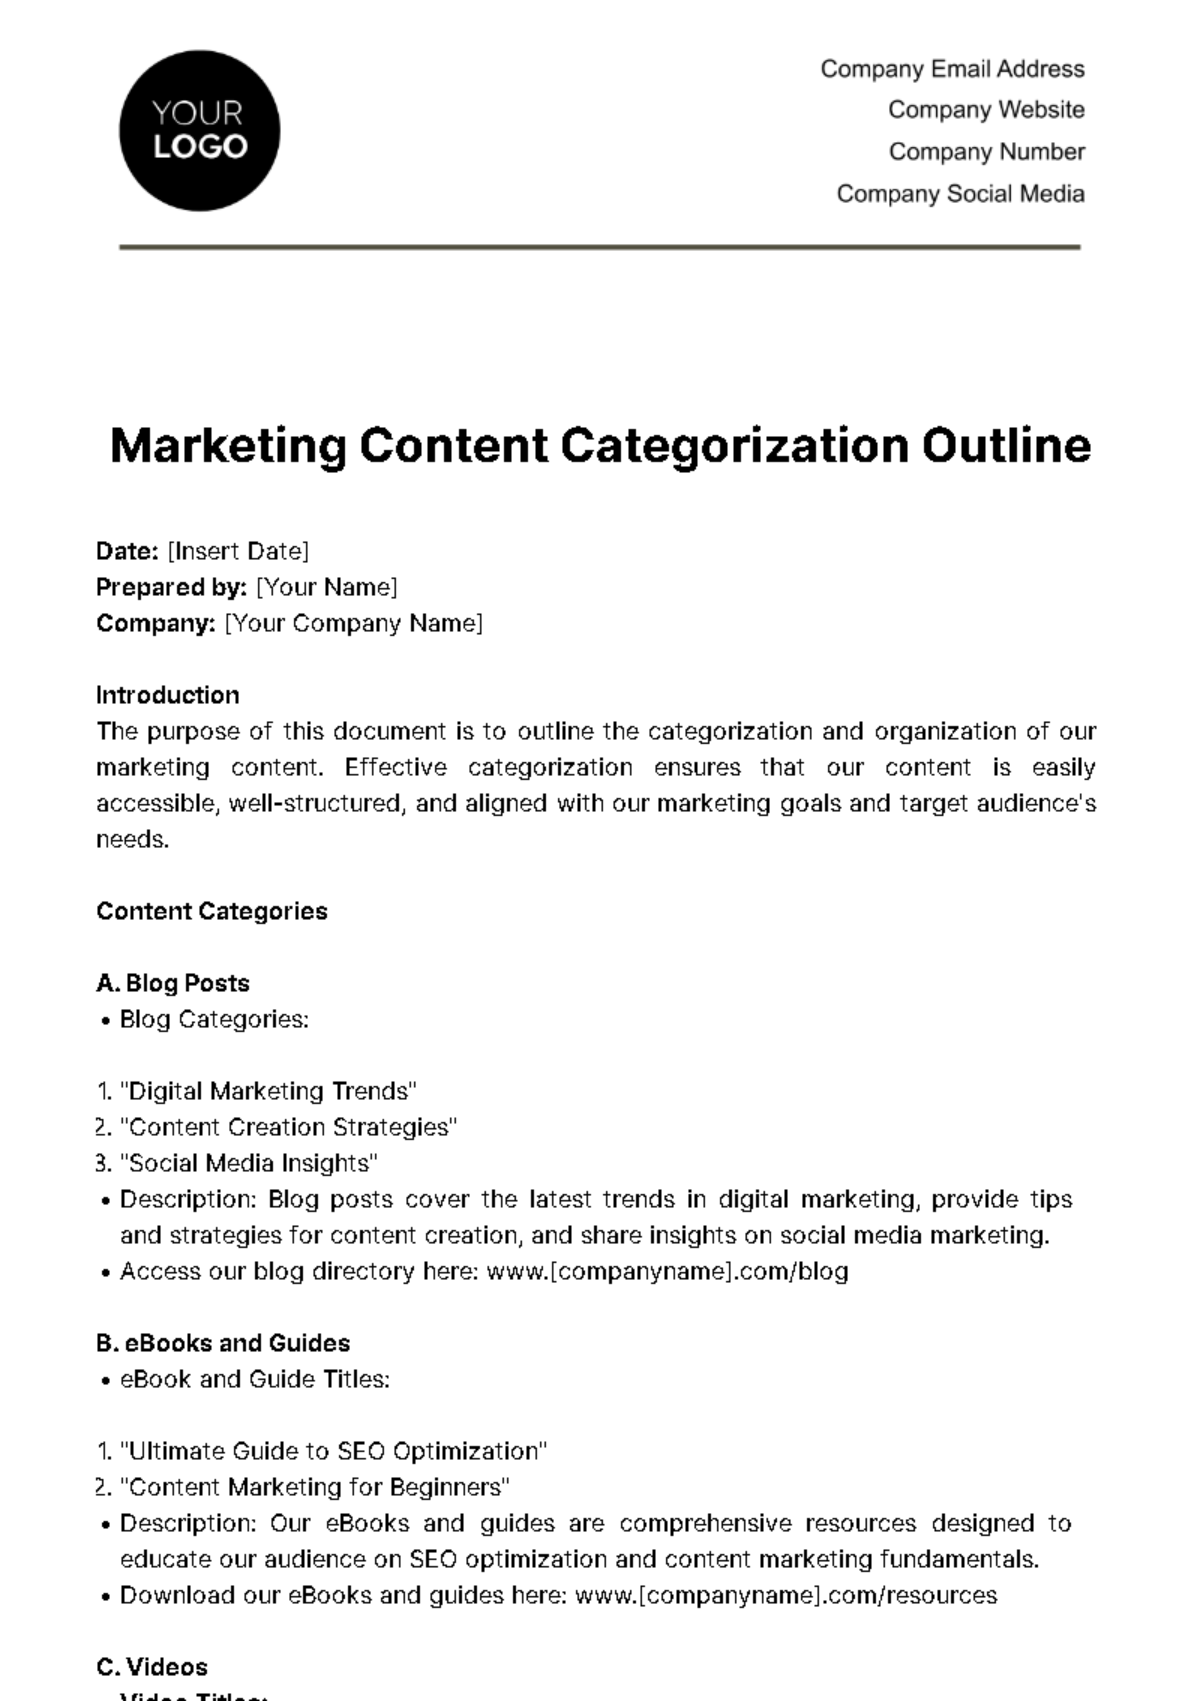 Marketing Content Categorization Outline Template